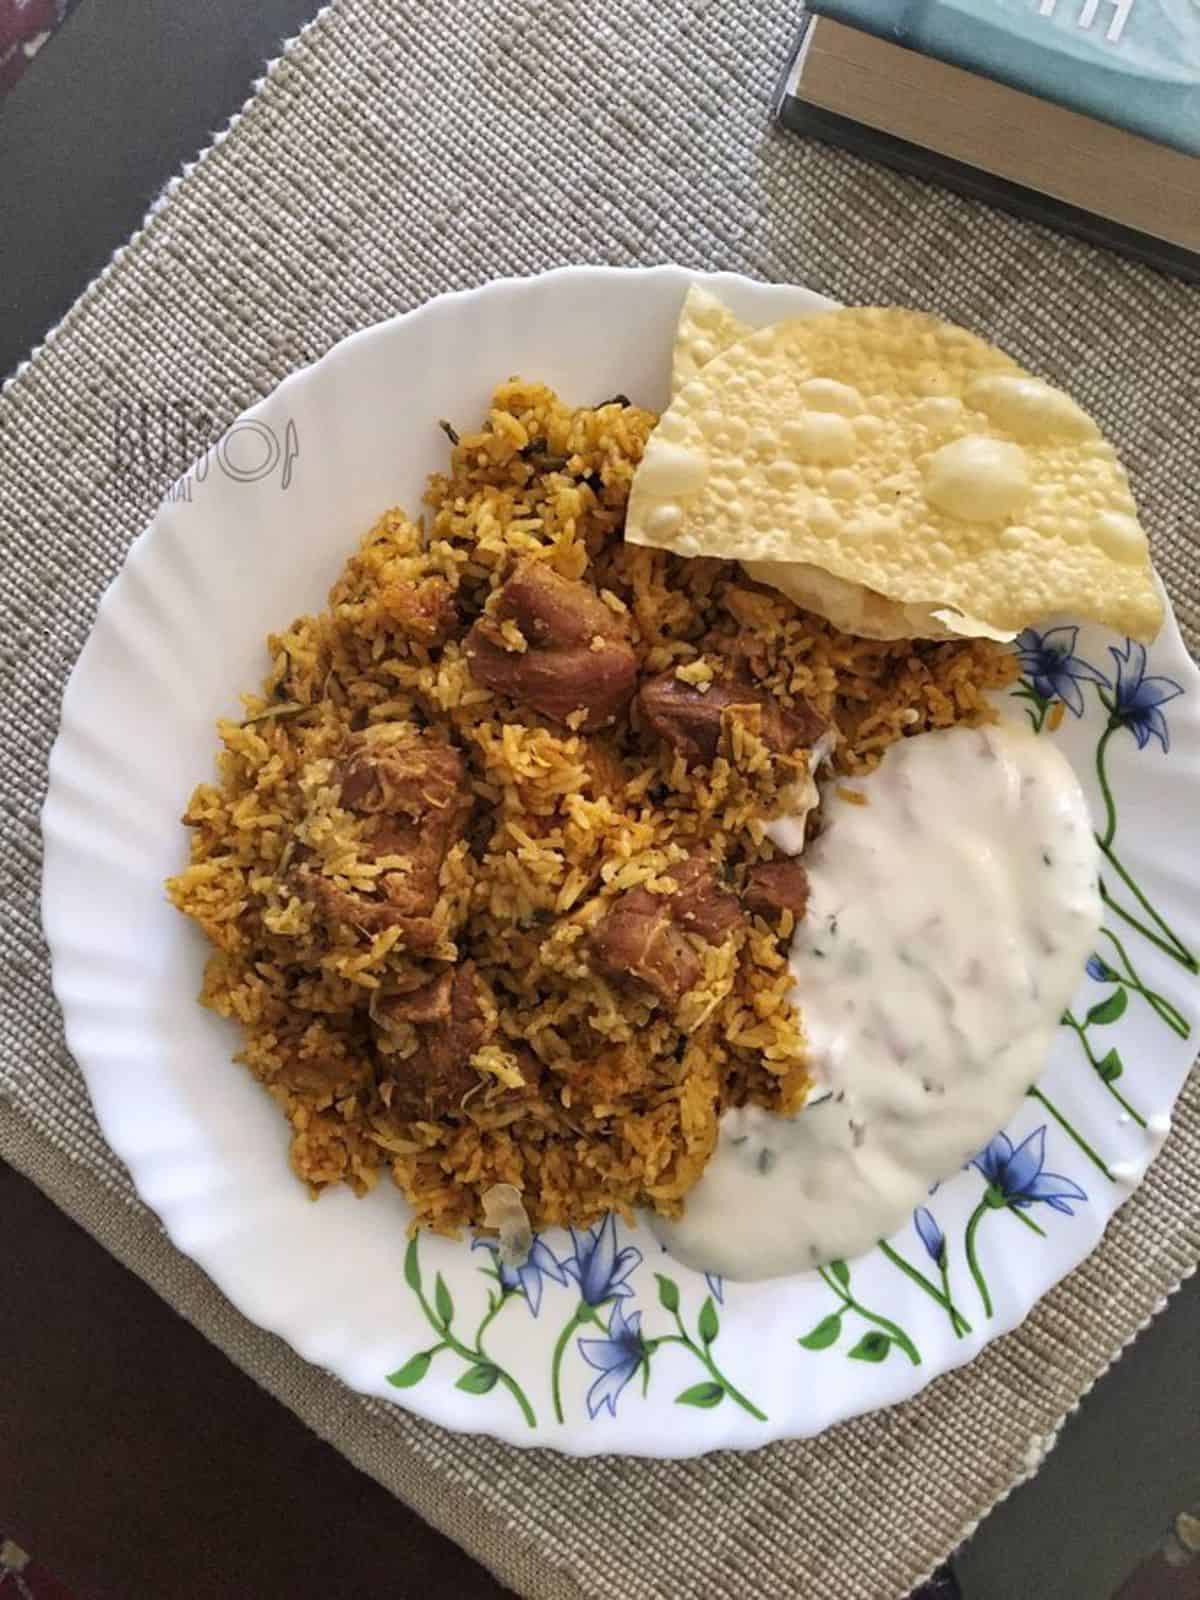 a plate of mutton biryani Tamilnadu style served with raitha, pappadam